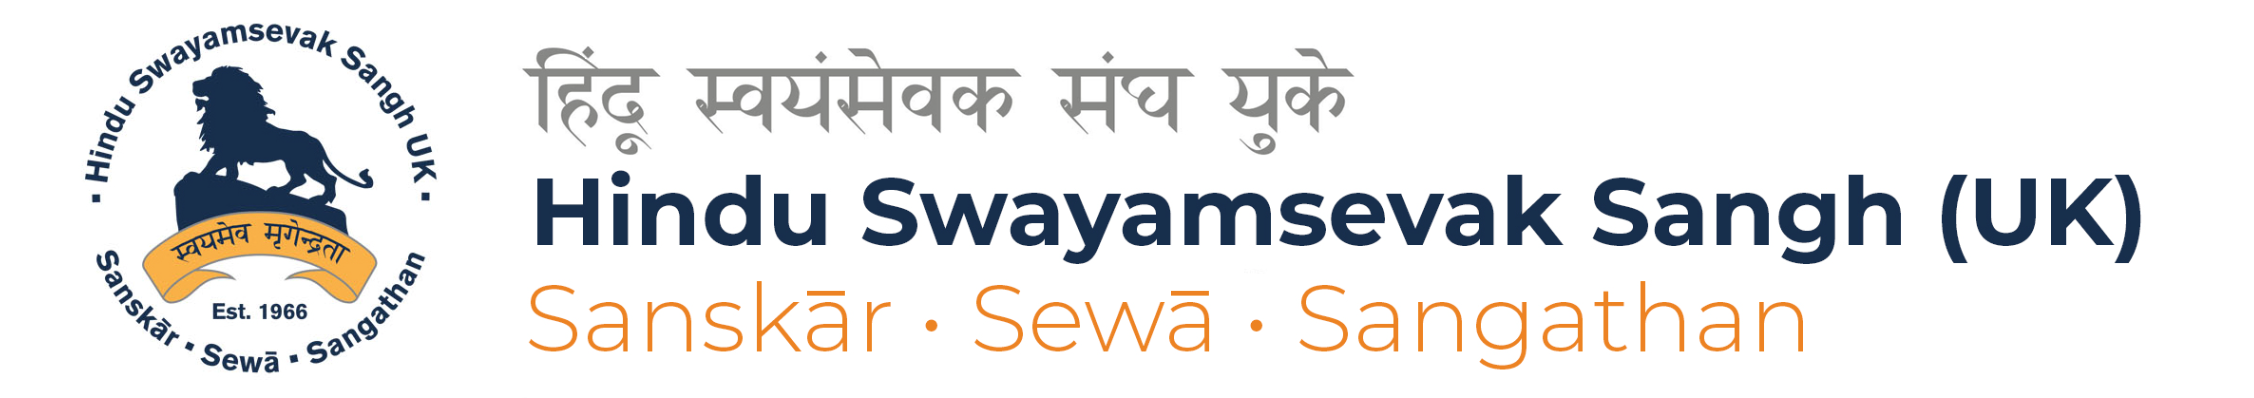 HSS UK | Hindu Swayamsevak Sangh UK